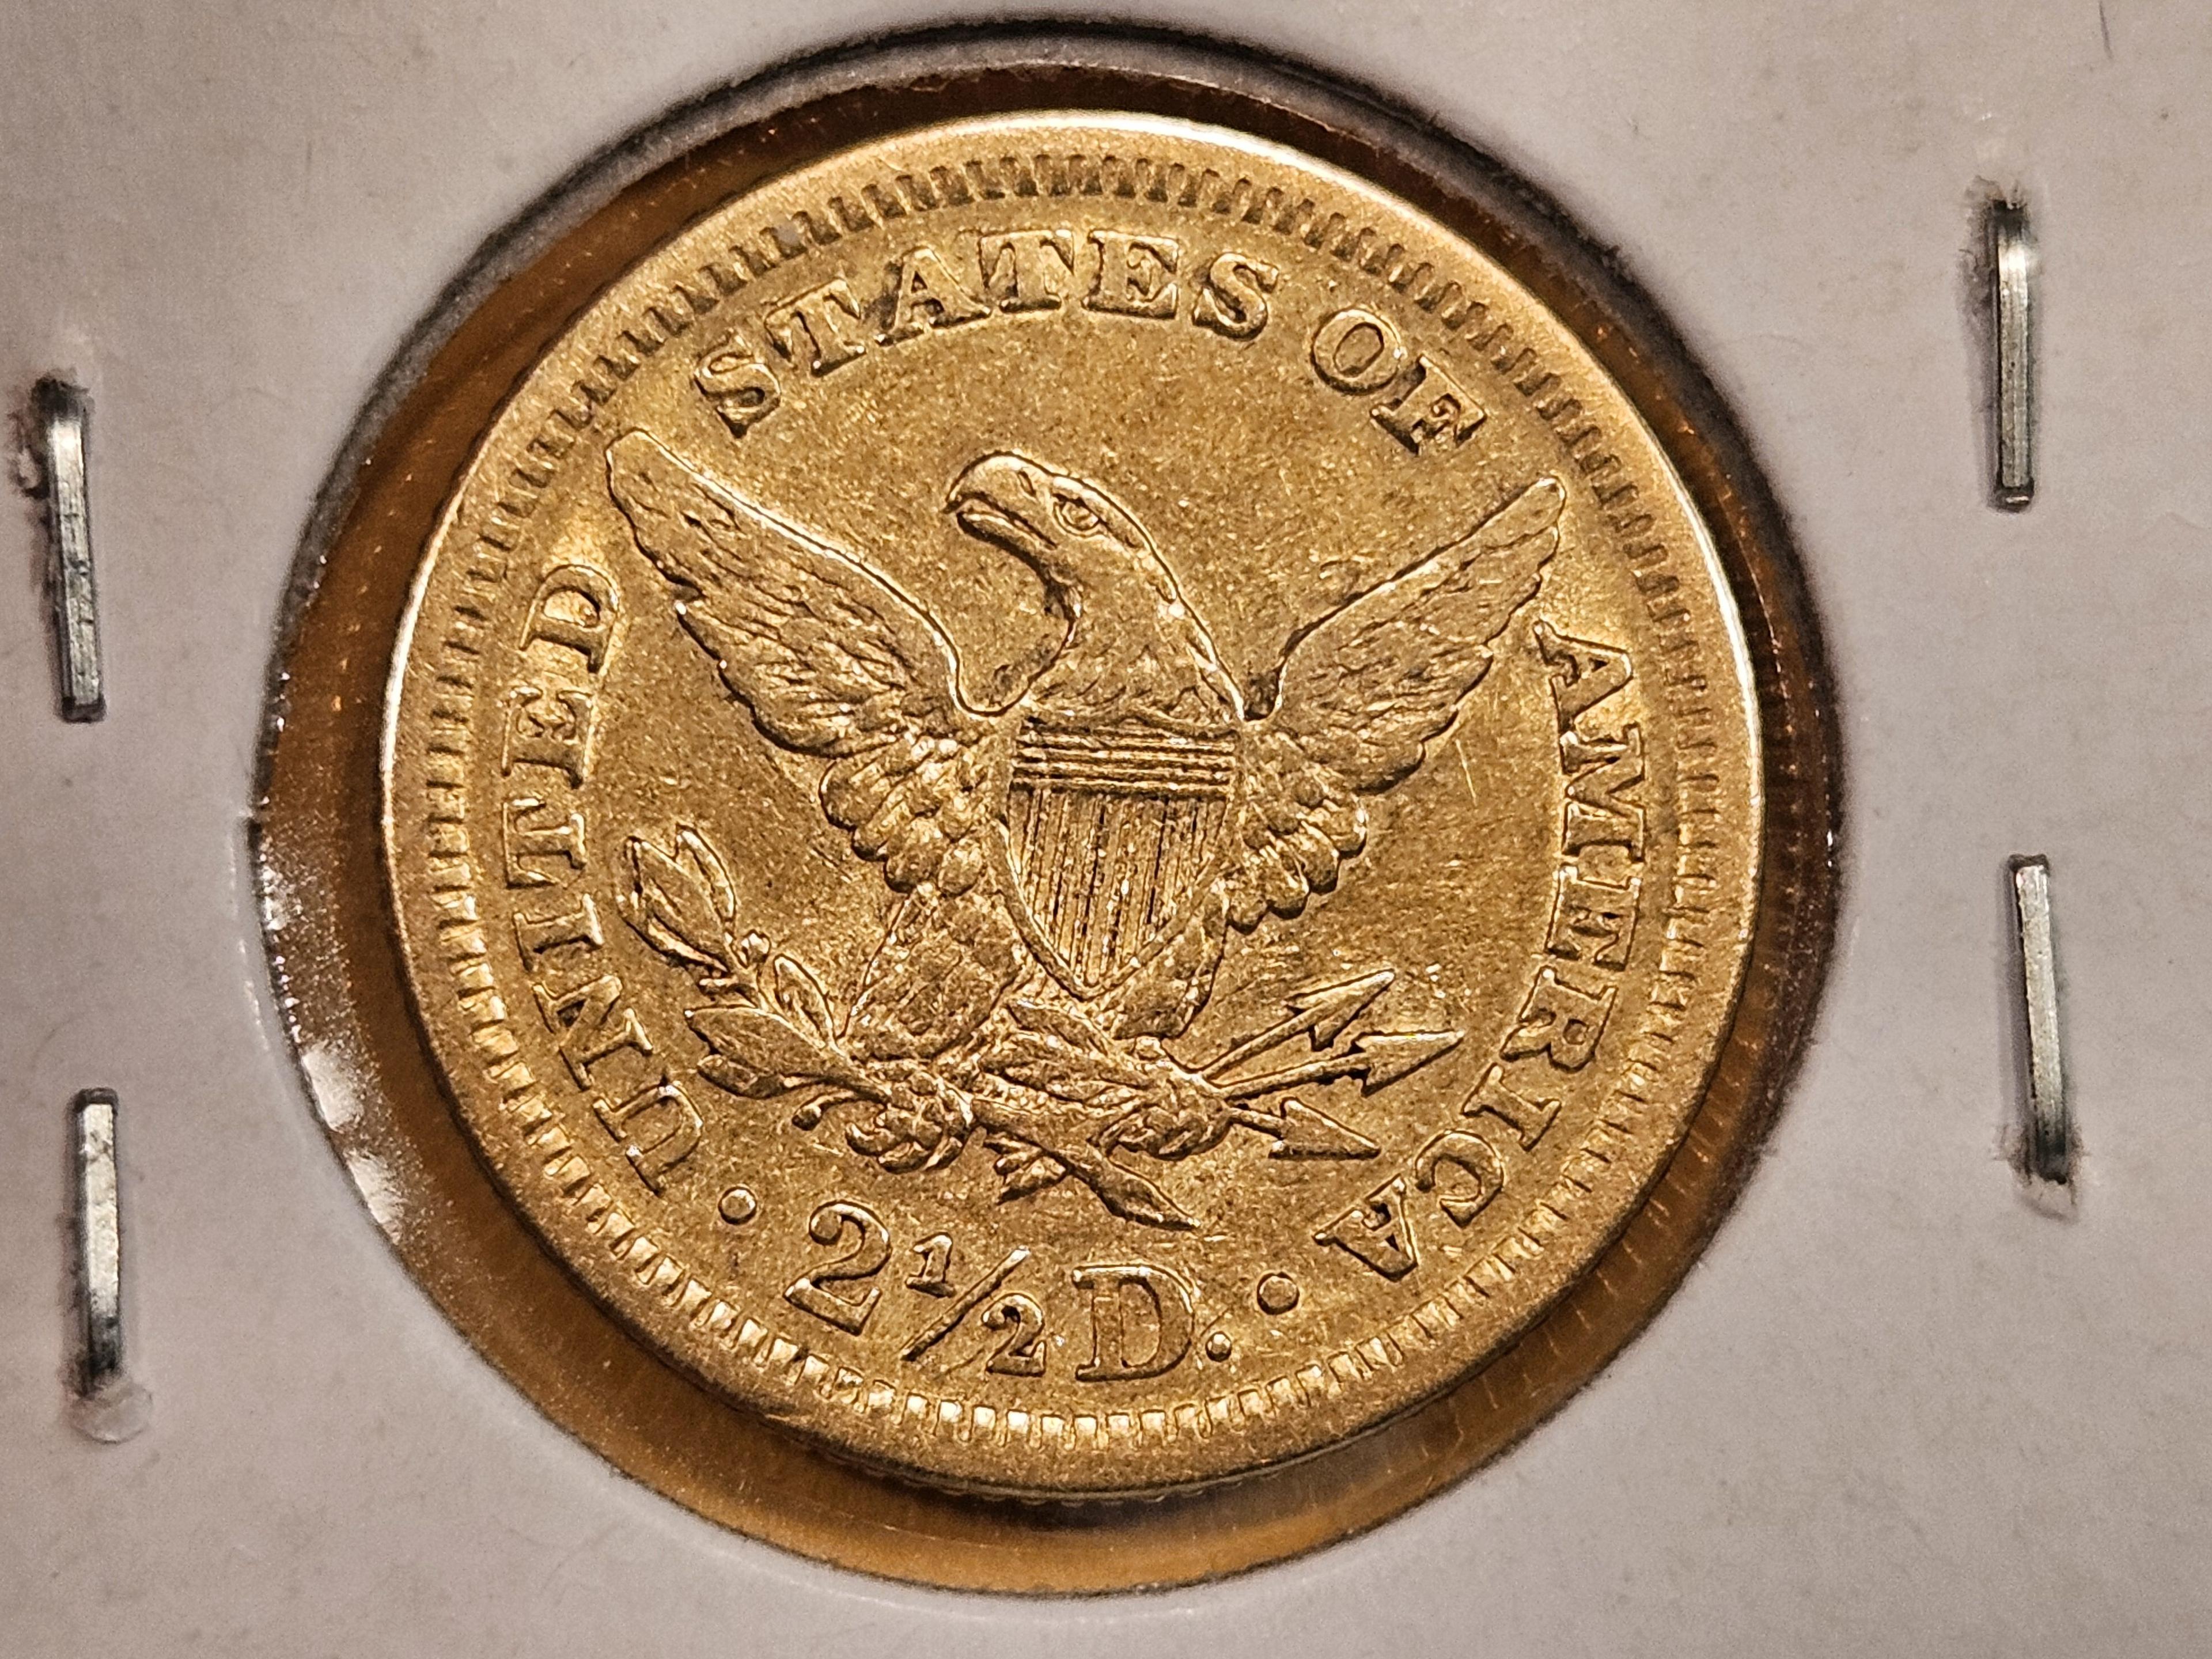 GOLD! Bright 1905 Liberty Head gold $2.5 dollars